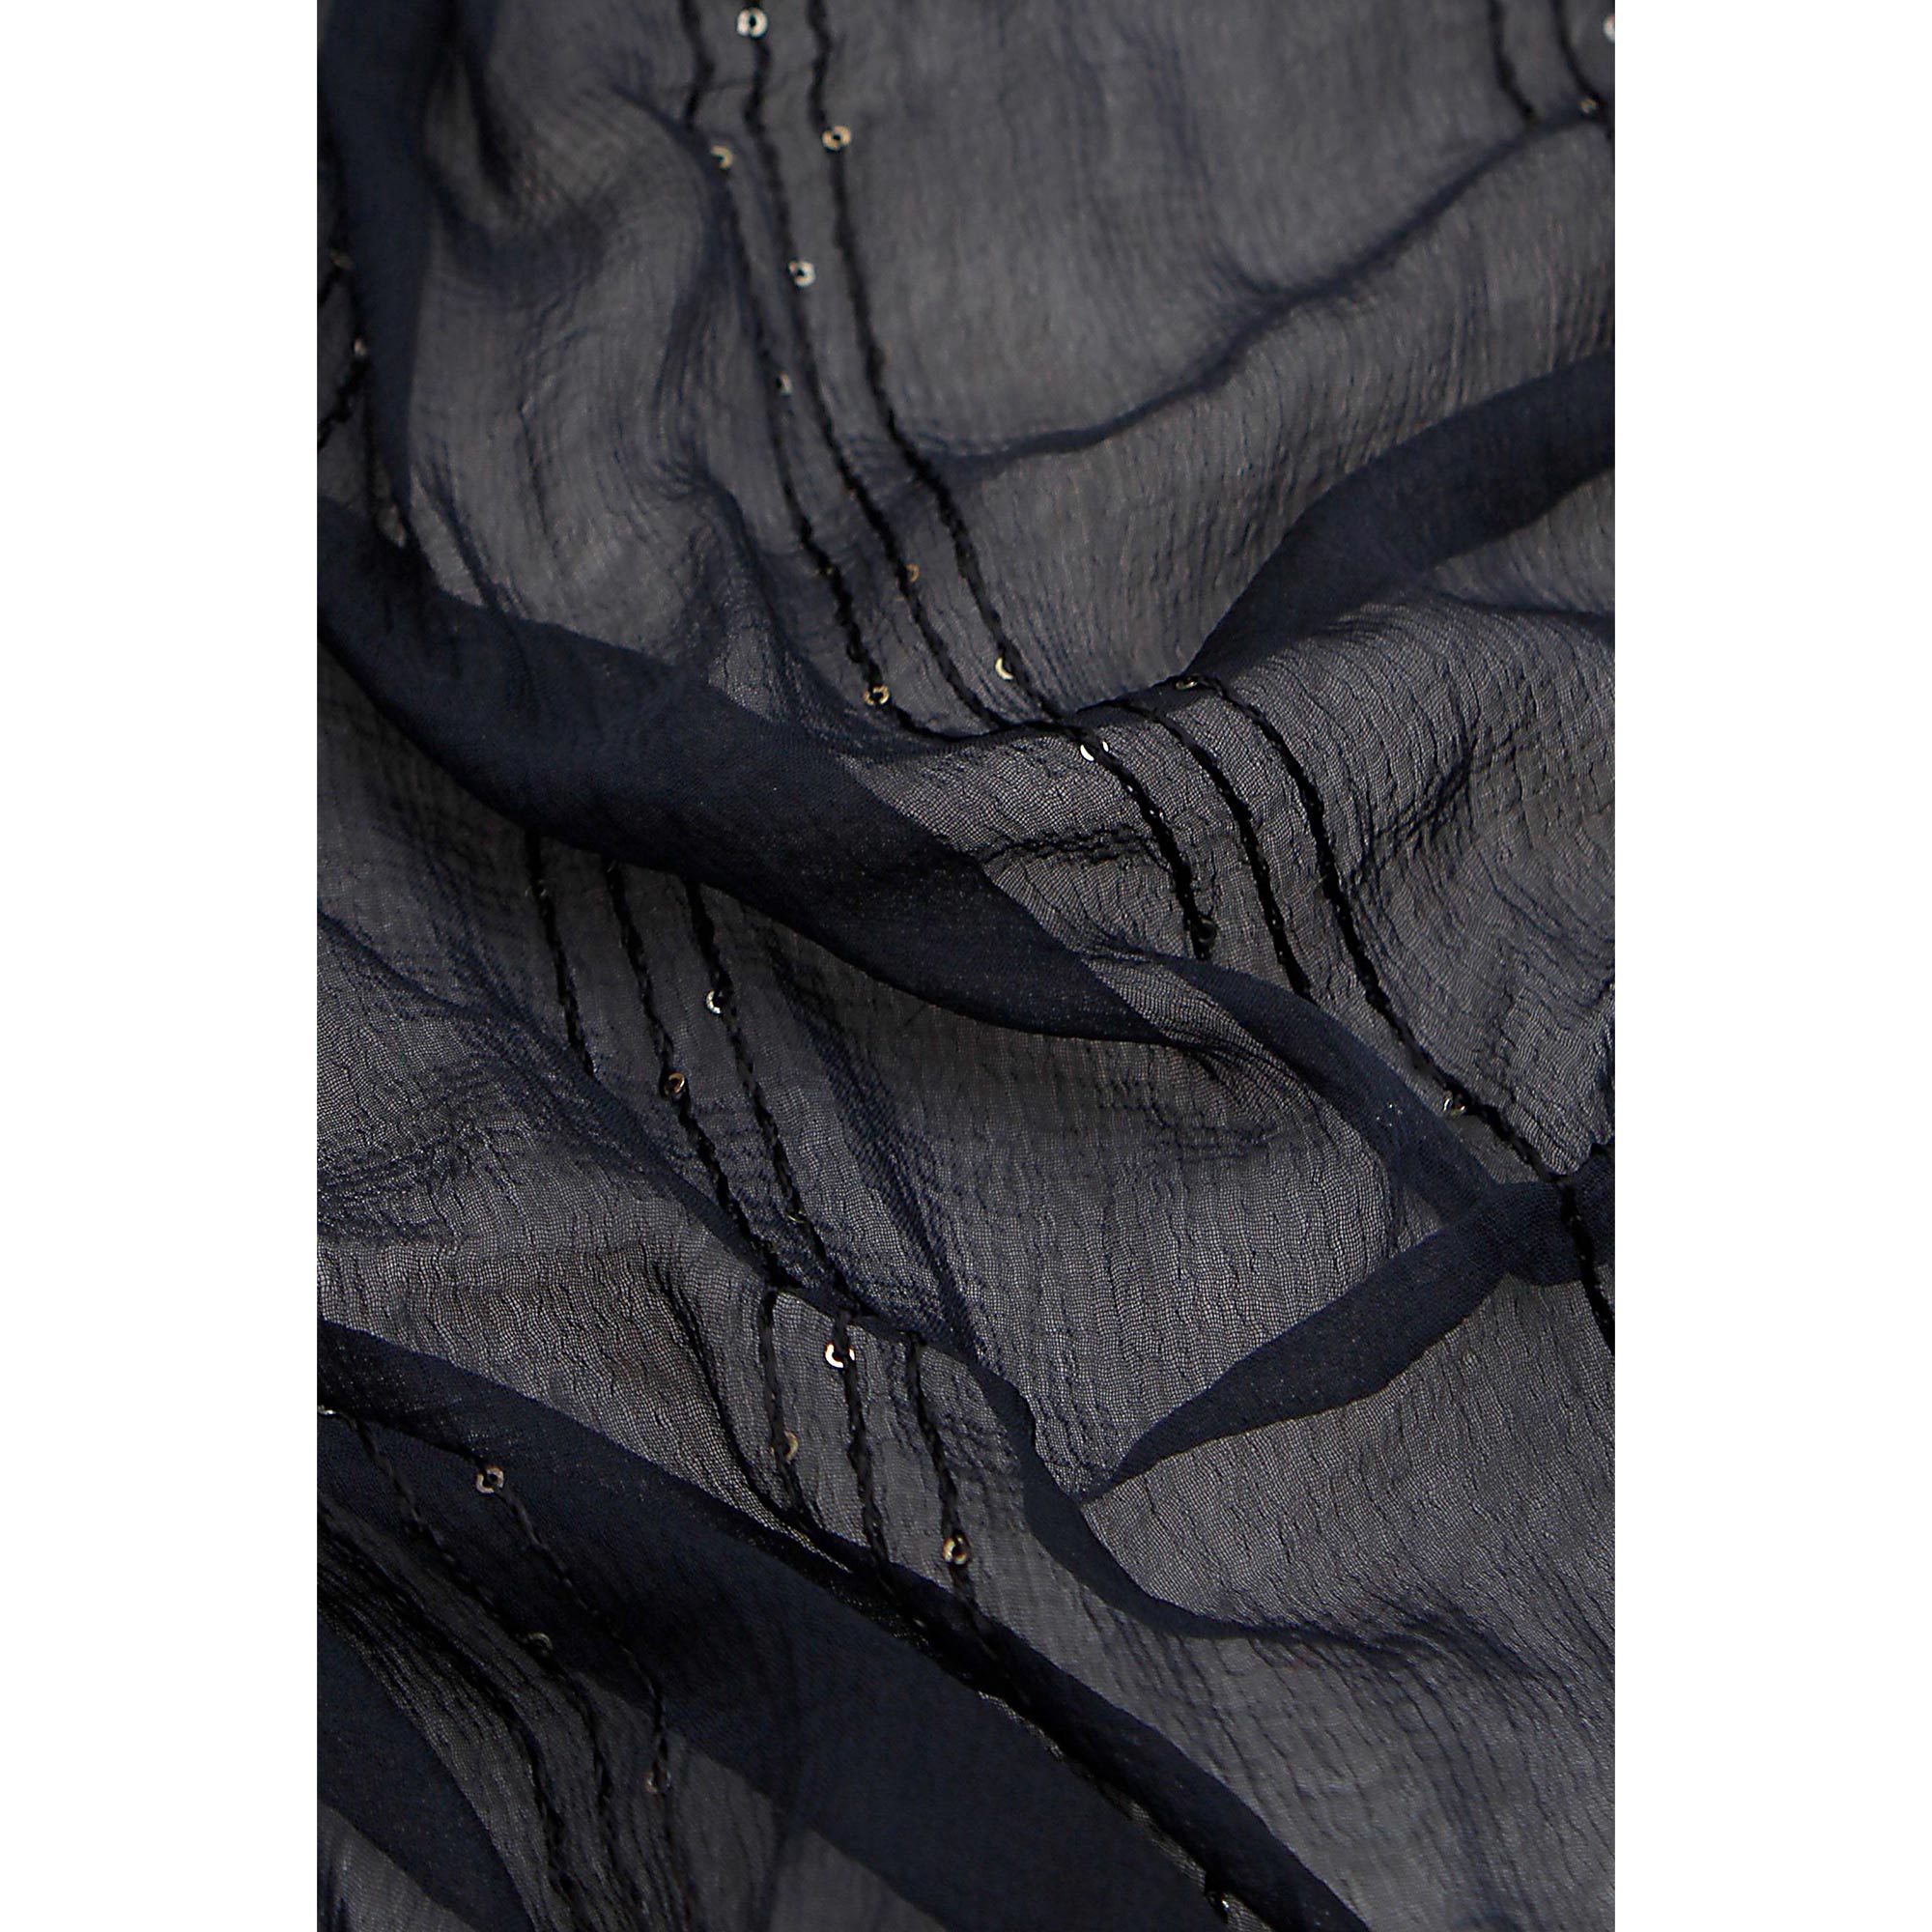 Grey Foil Printed Cotton Blend Dress Material